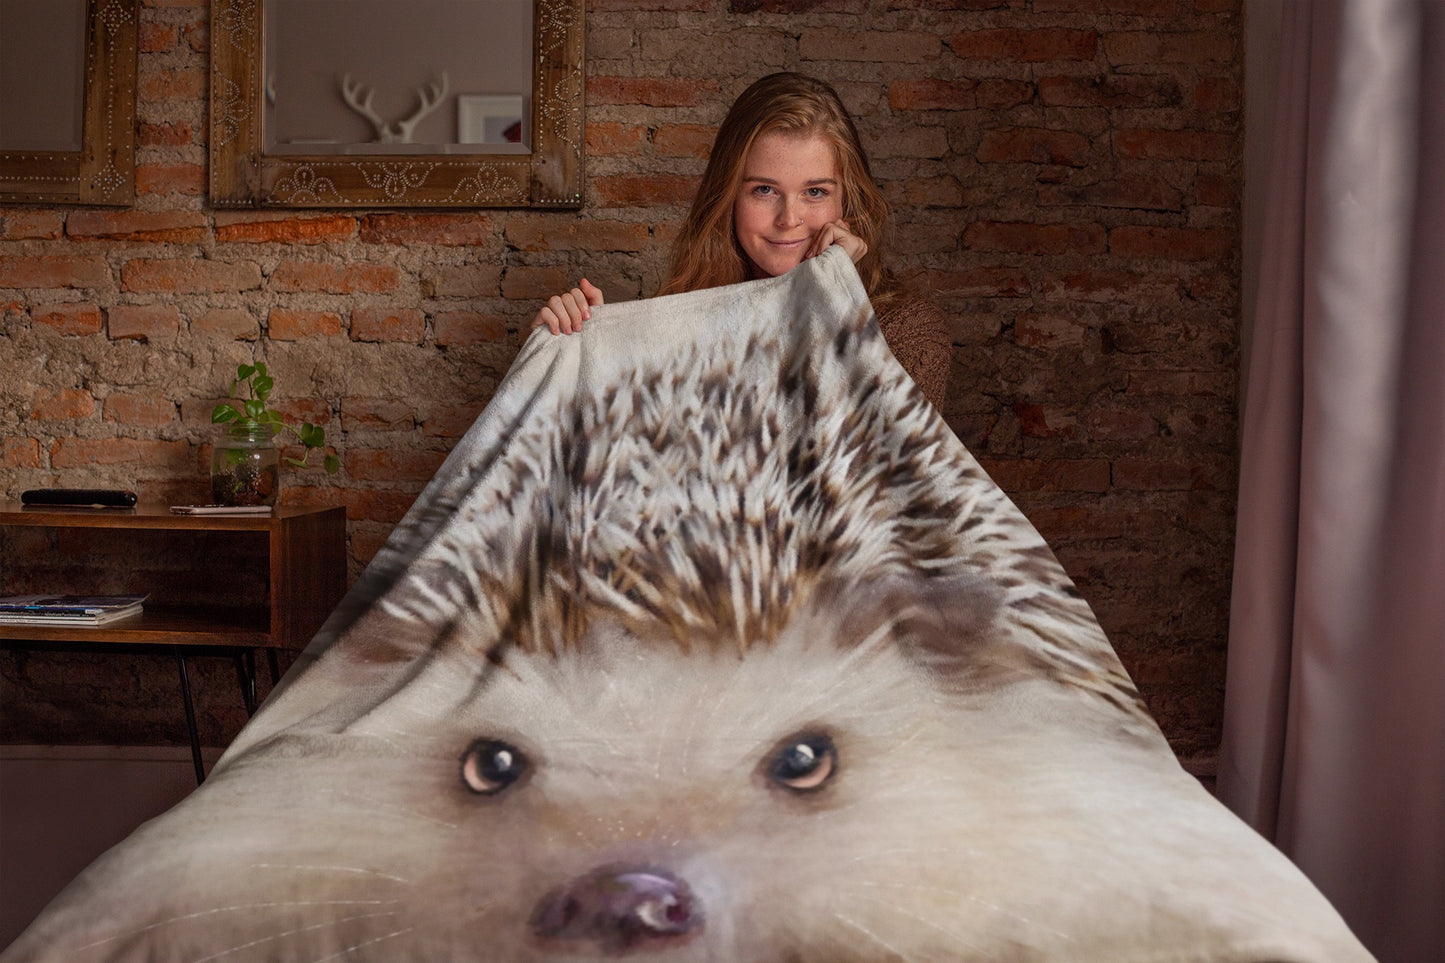 British Wildlife Art Hedgehog Premium Blanket Throw Gift Idea 200 x 150 cm / 60" x 80"